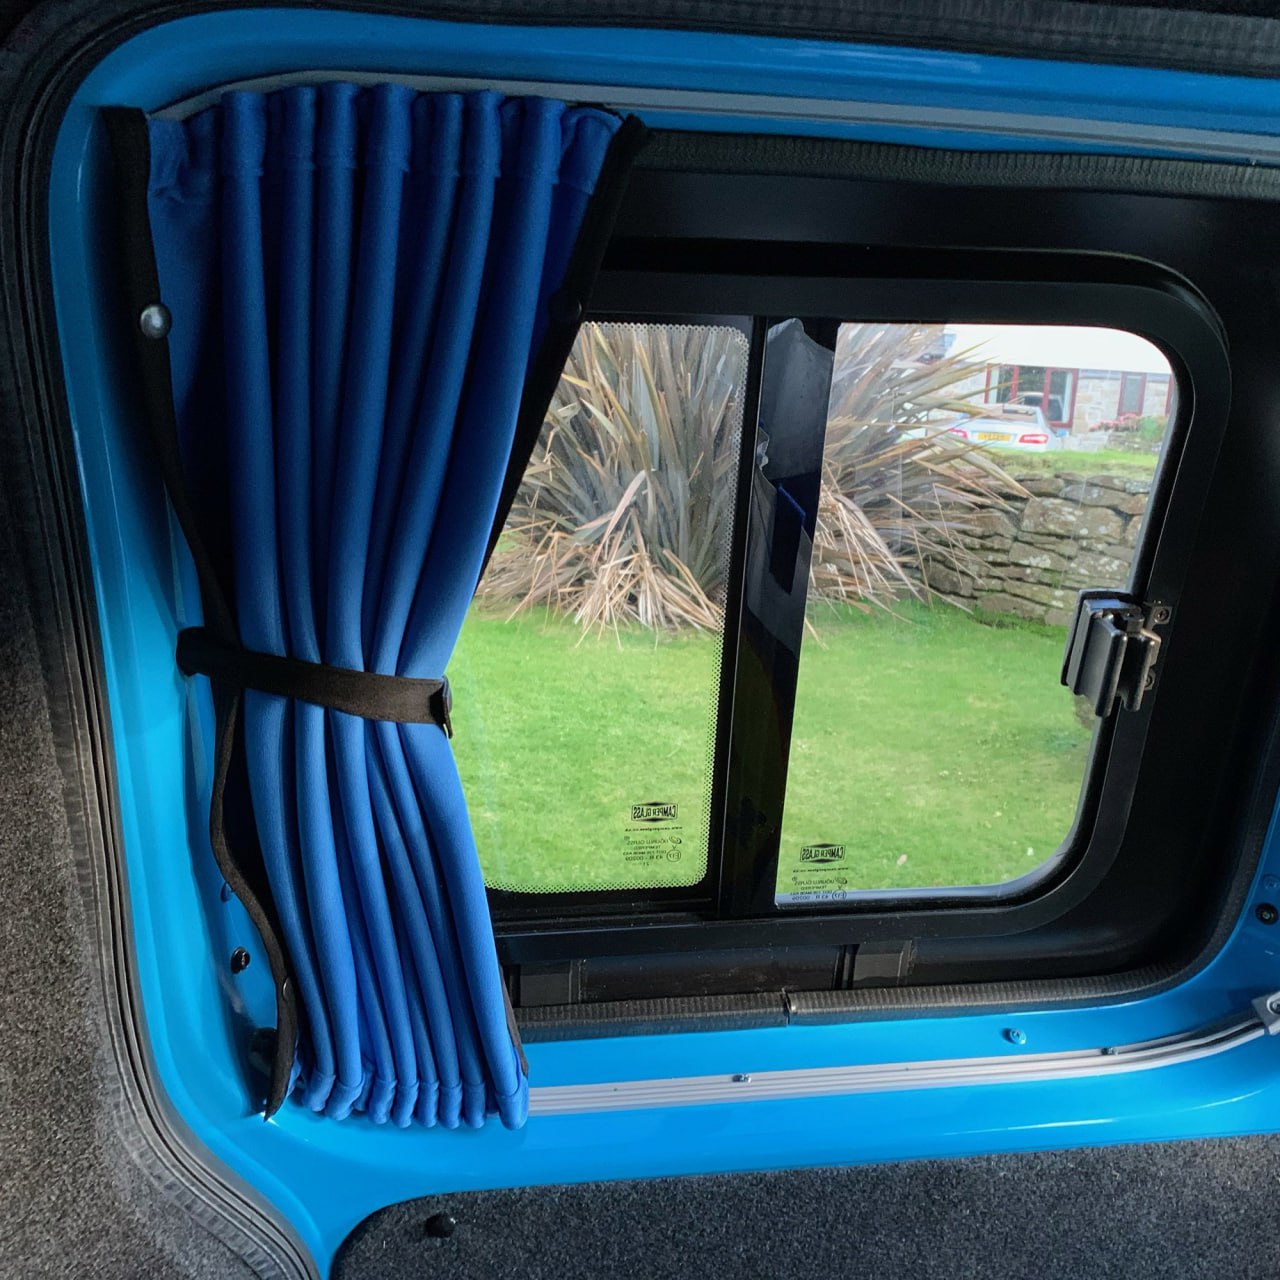 Citroen Dispatch Premium Curtains Van-X - Black/Blue